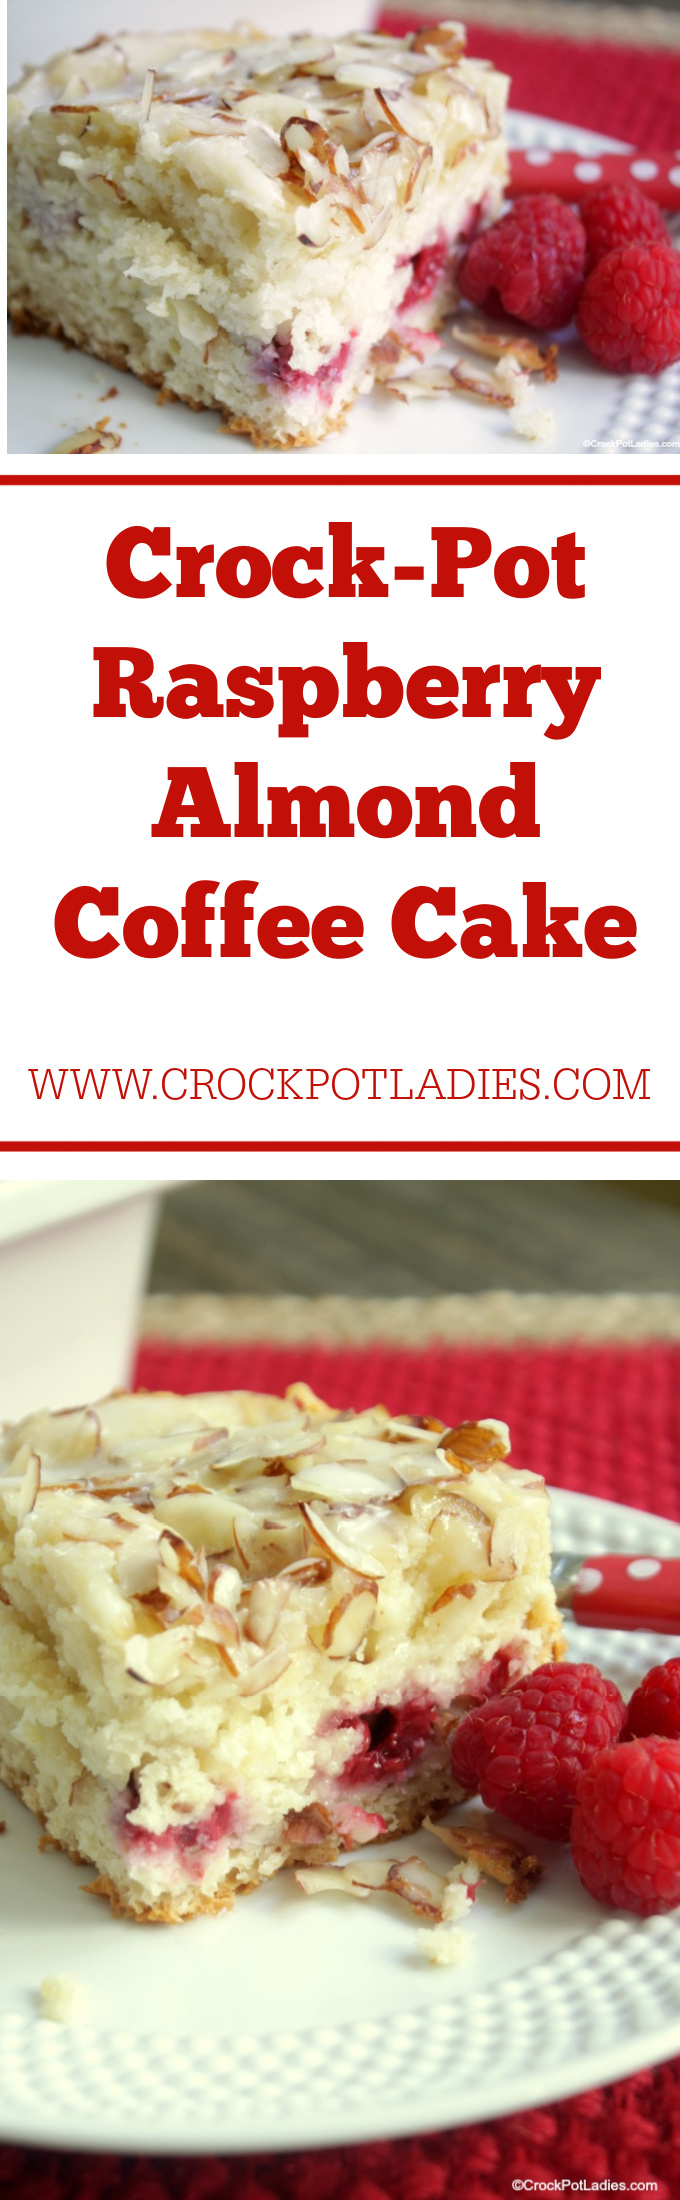 Crock-Pot Raspberry Almond Coffee Cake